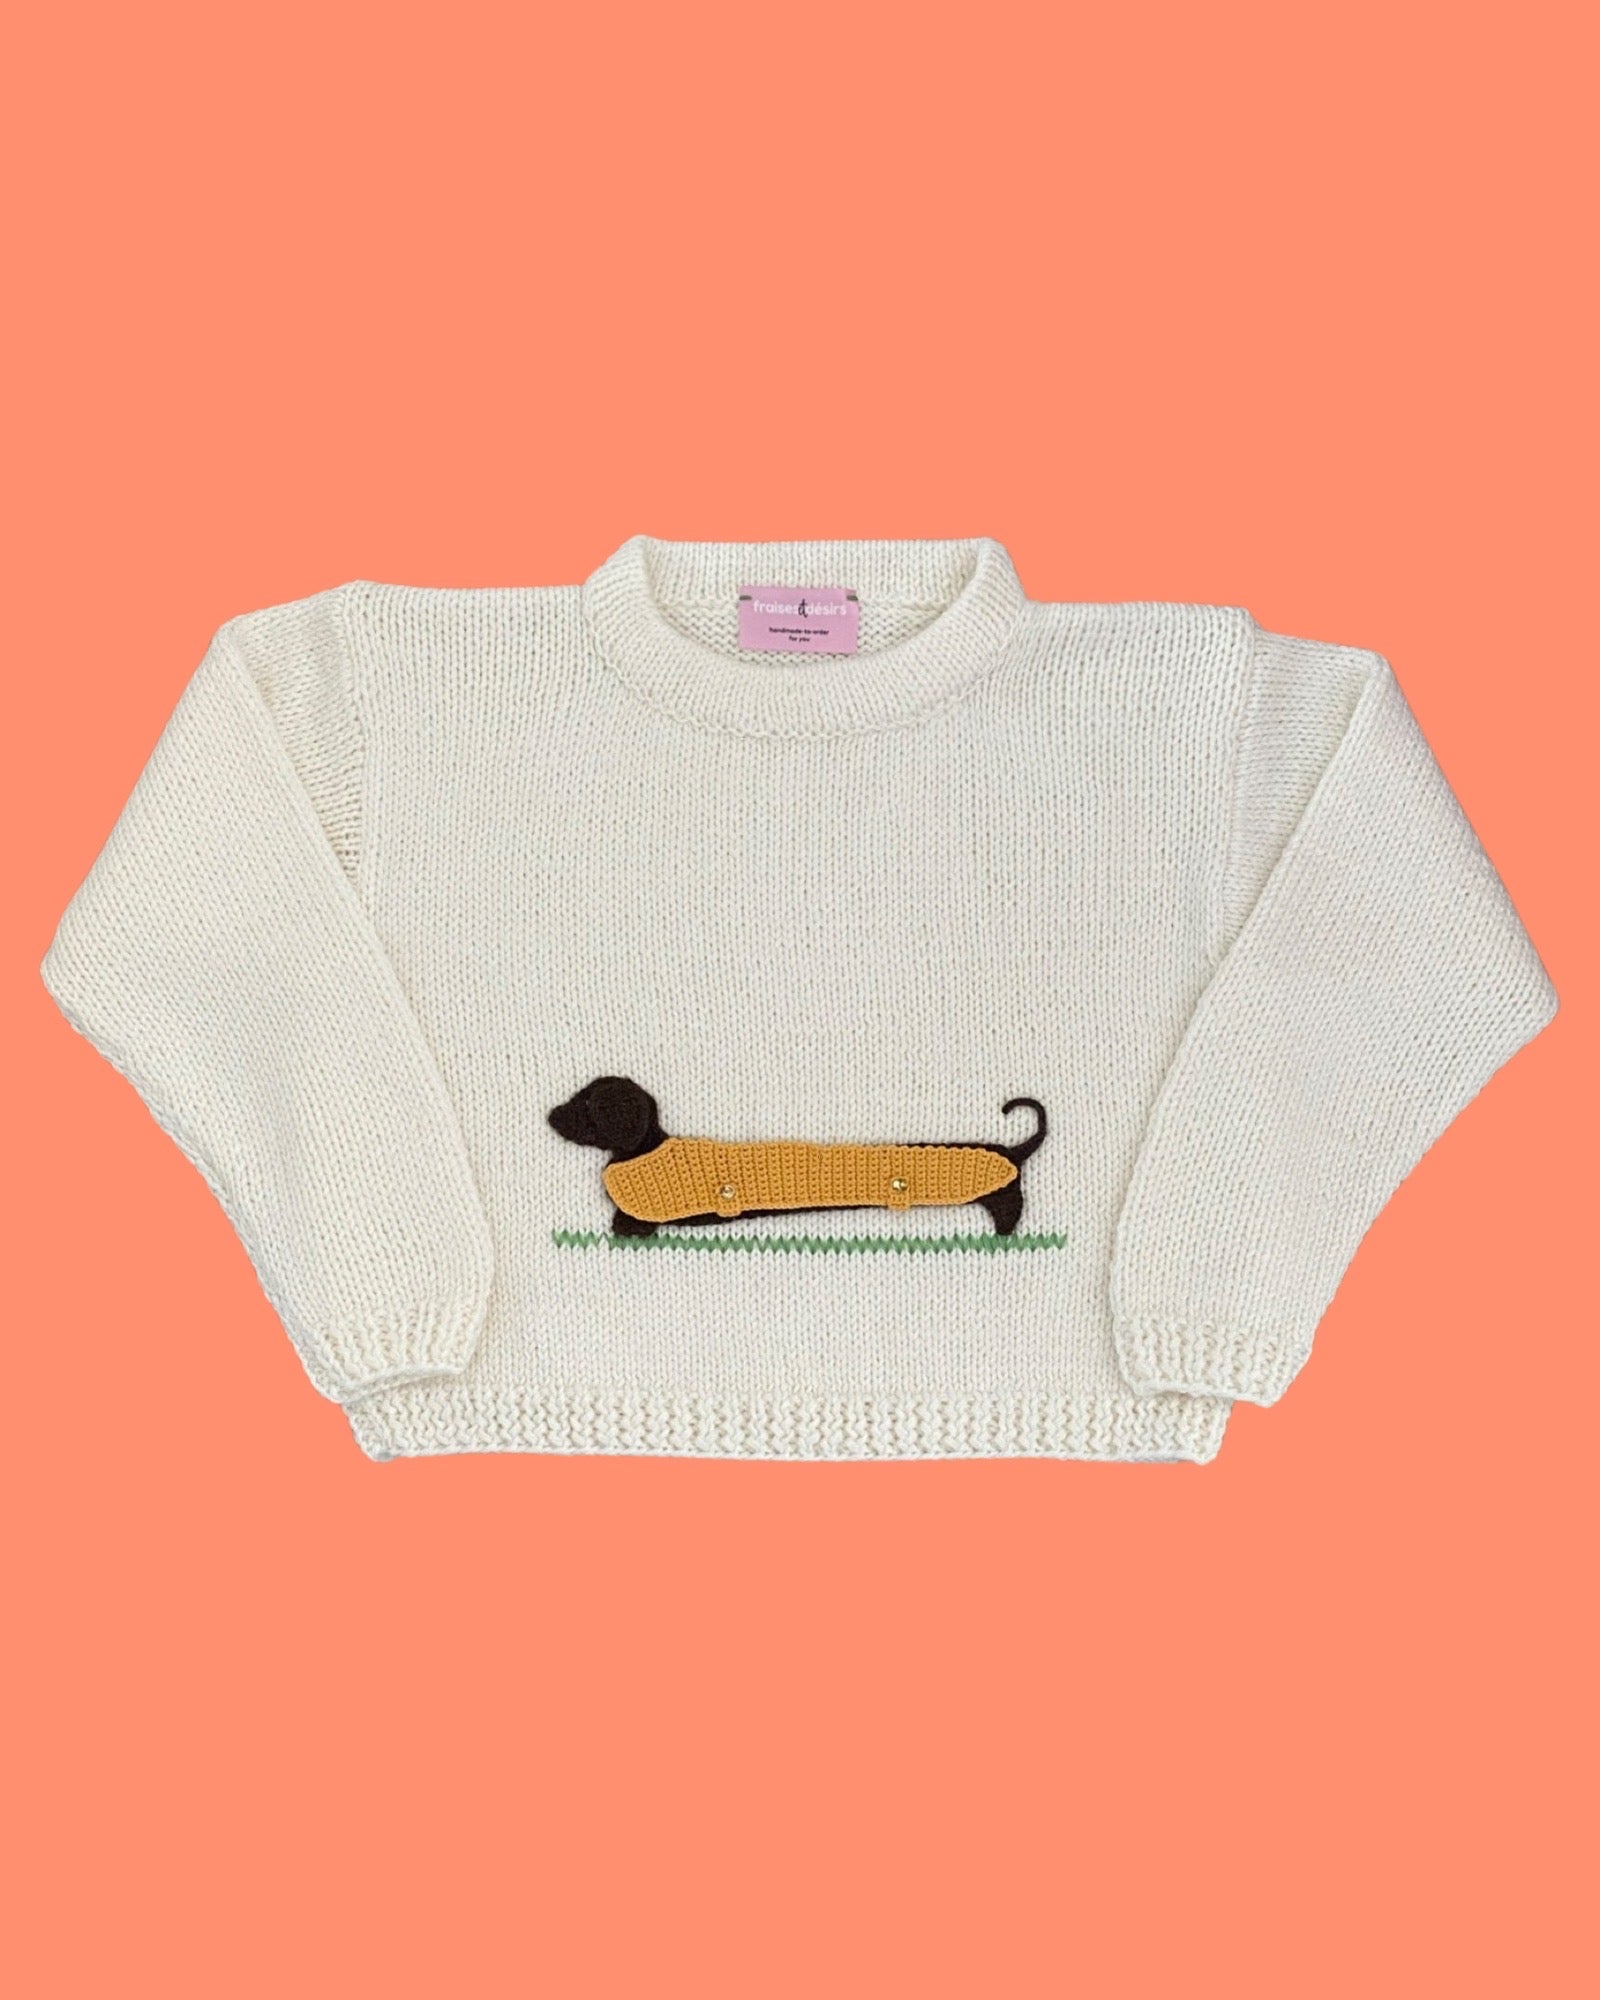 The Sausage Dog sweater